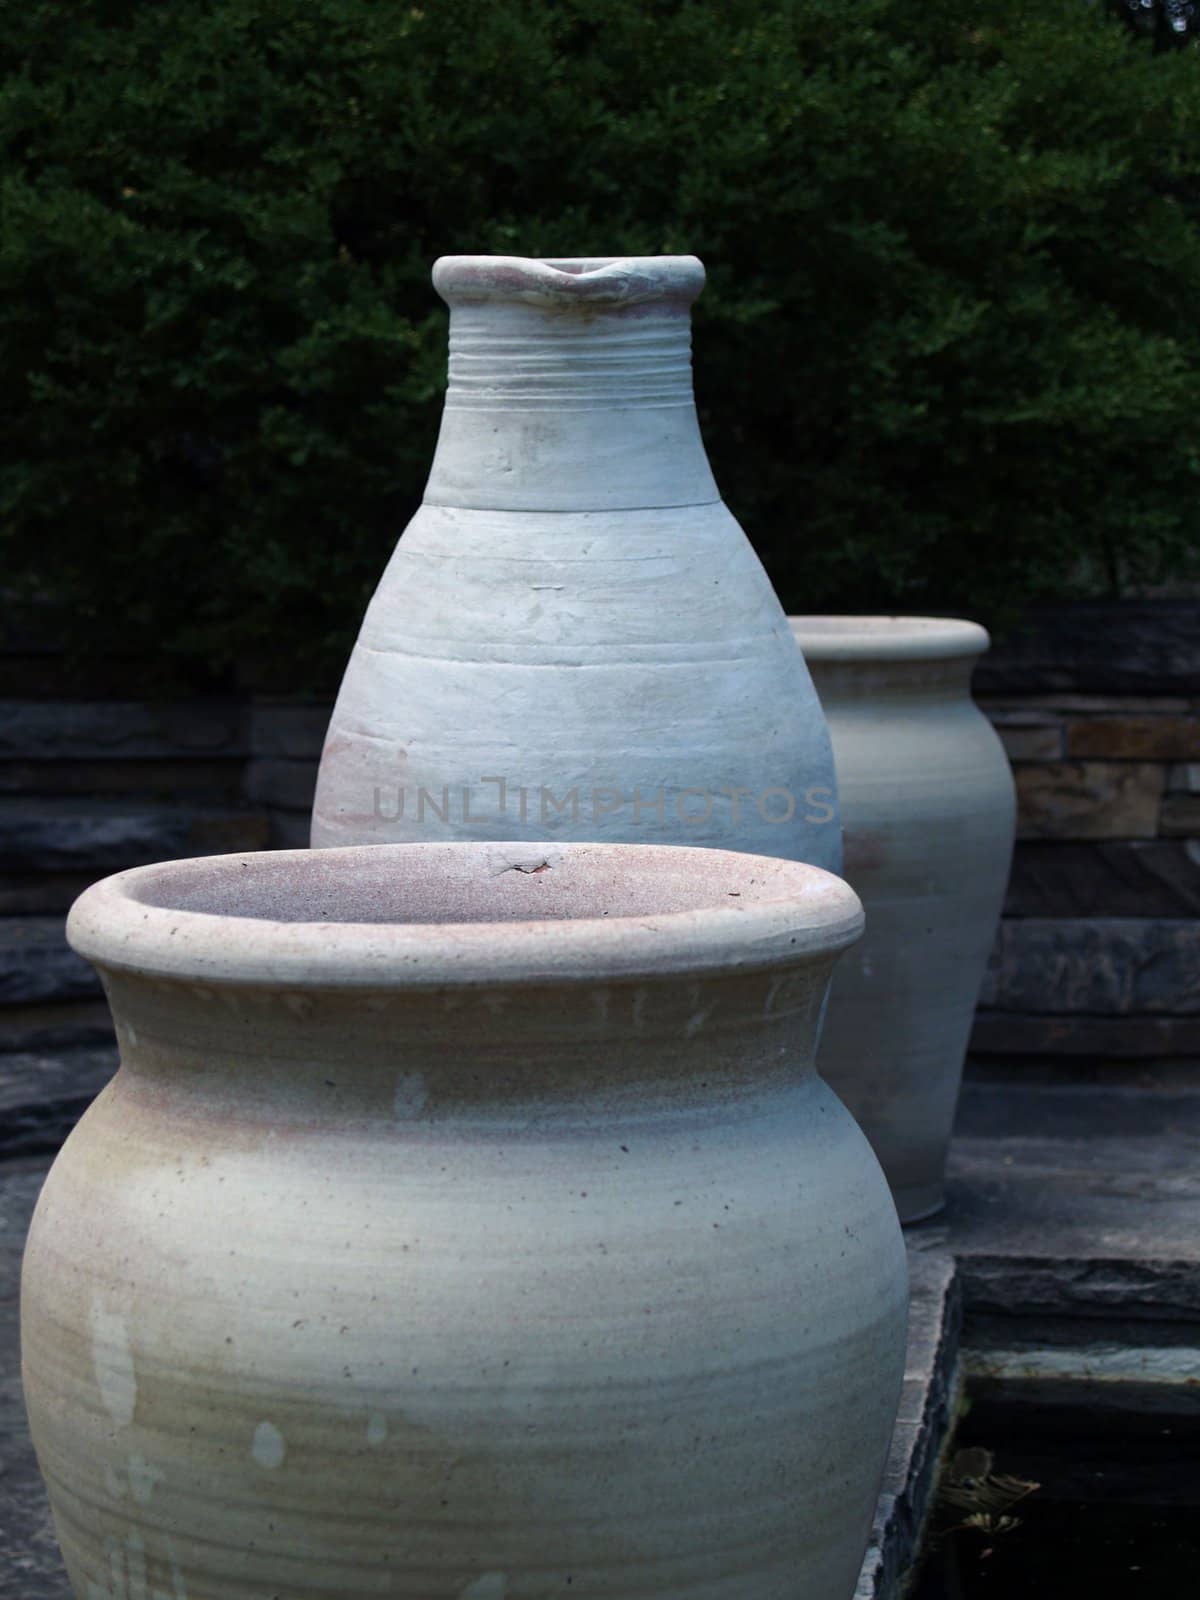 three clay pots sitting in a row